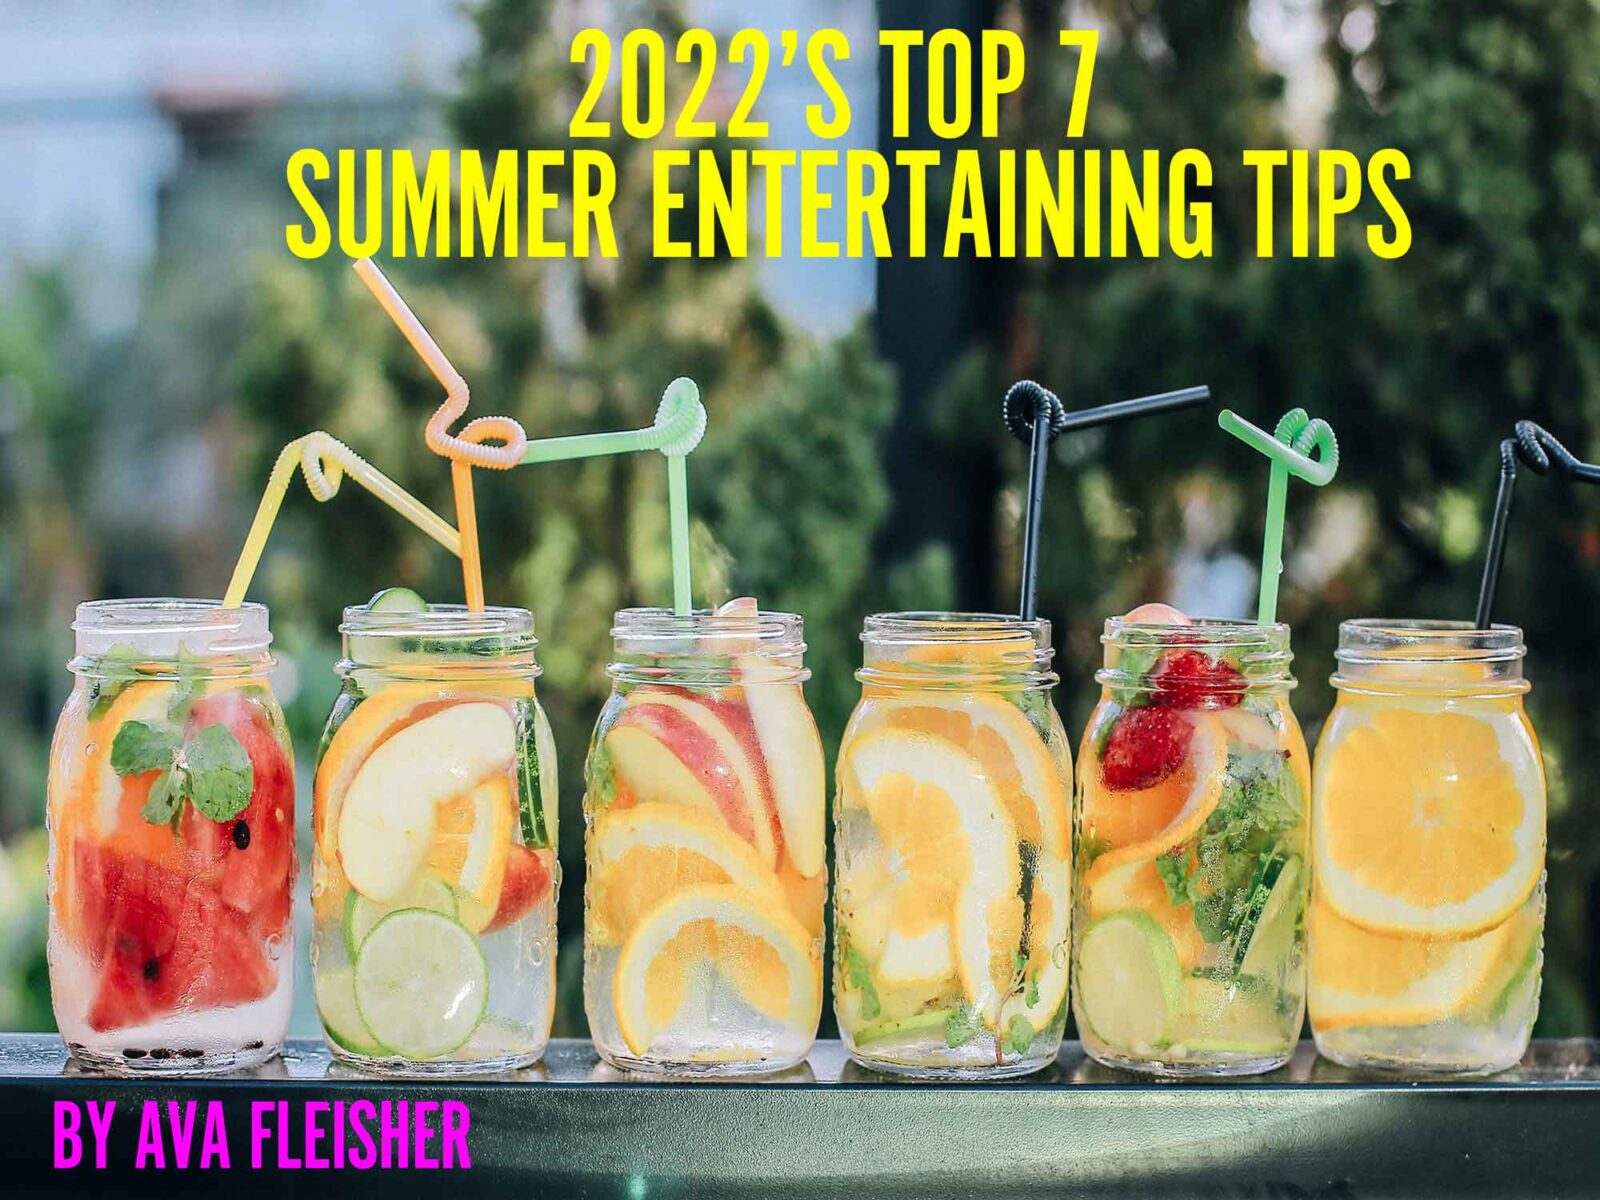 2022’s Top 7 Summer Entertaining Tips